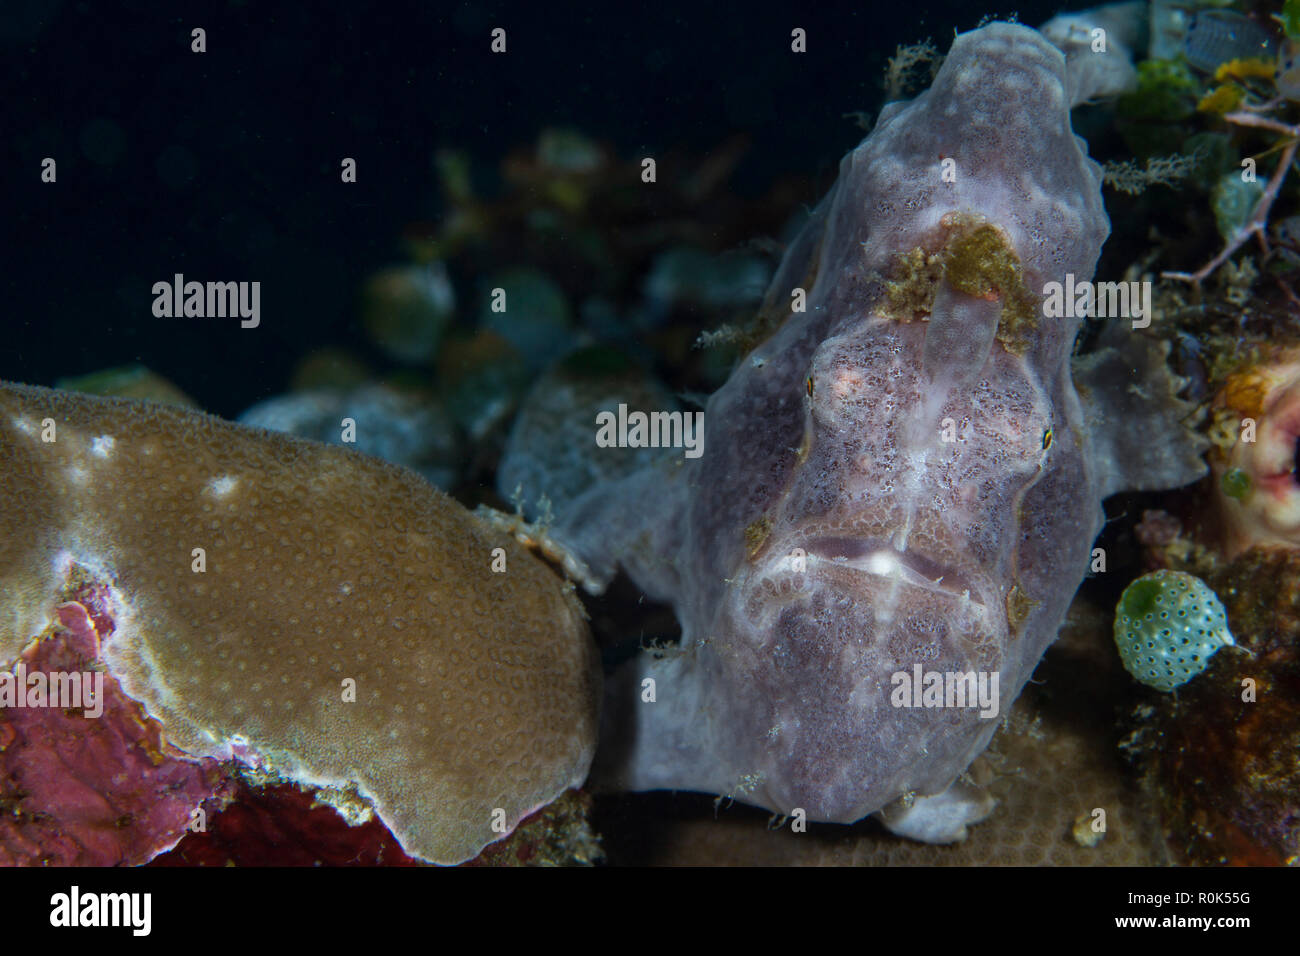 Longlure frogfish, Anilao, Philippines. Stock Photo